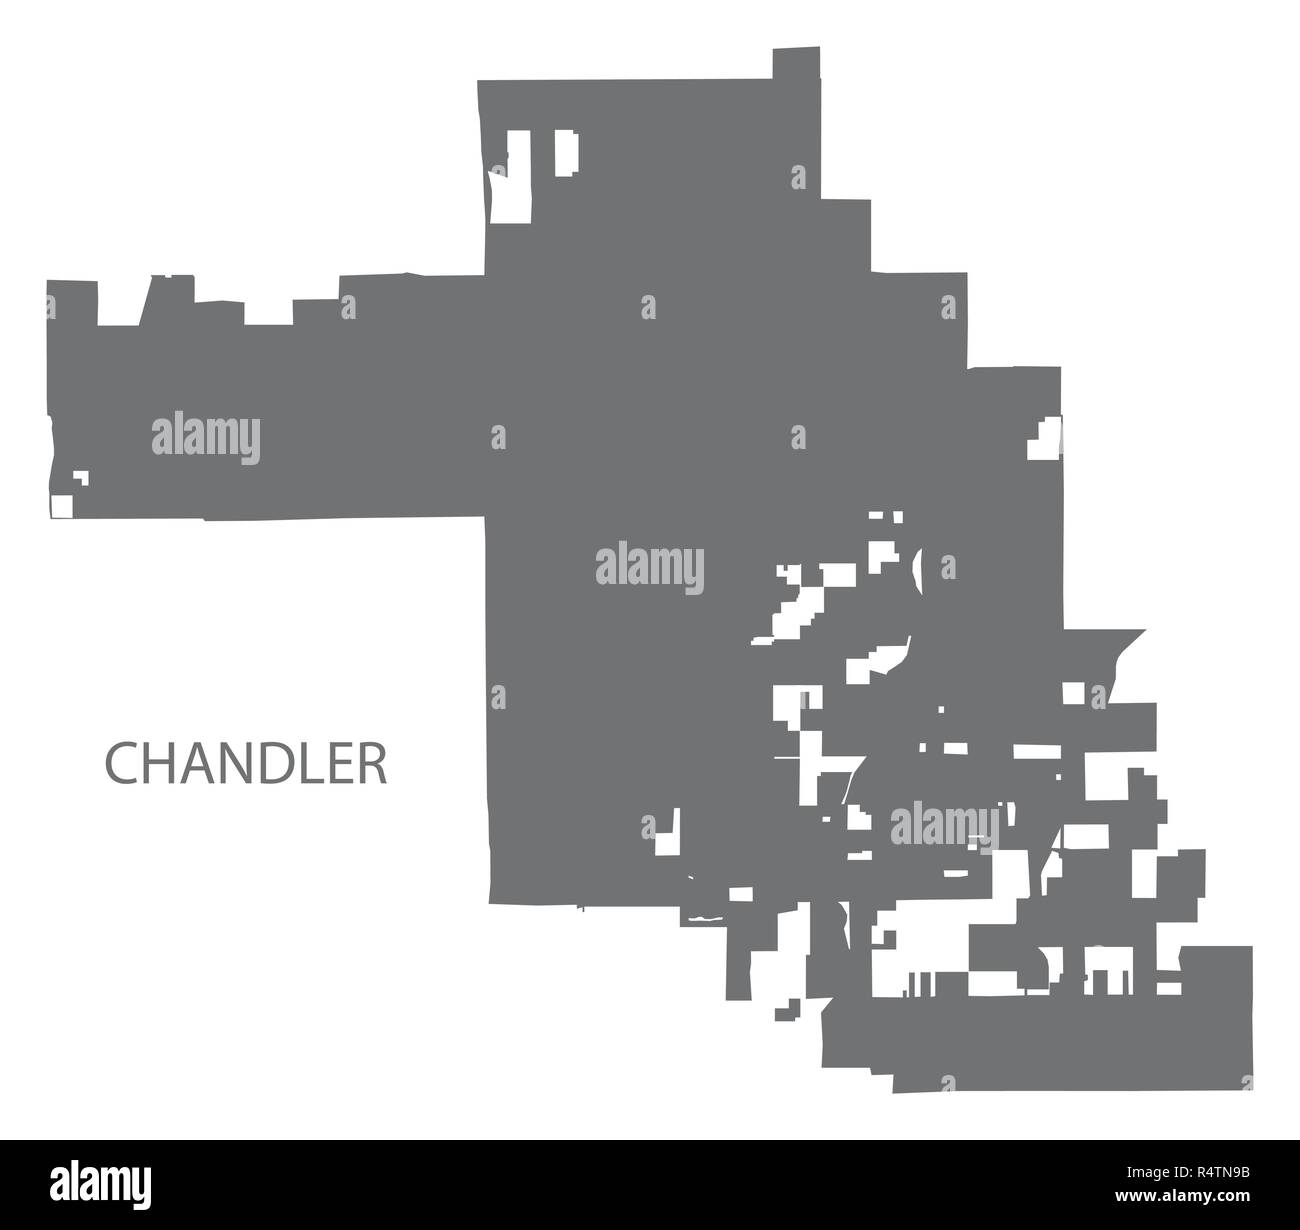 Chandler Arizona city map grey illustration silhouette Stock Vector